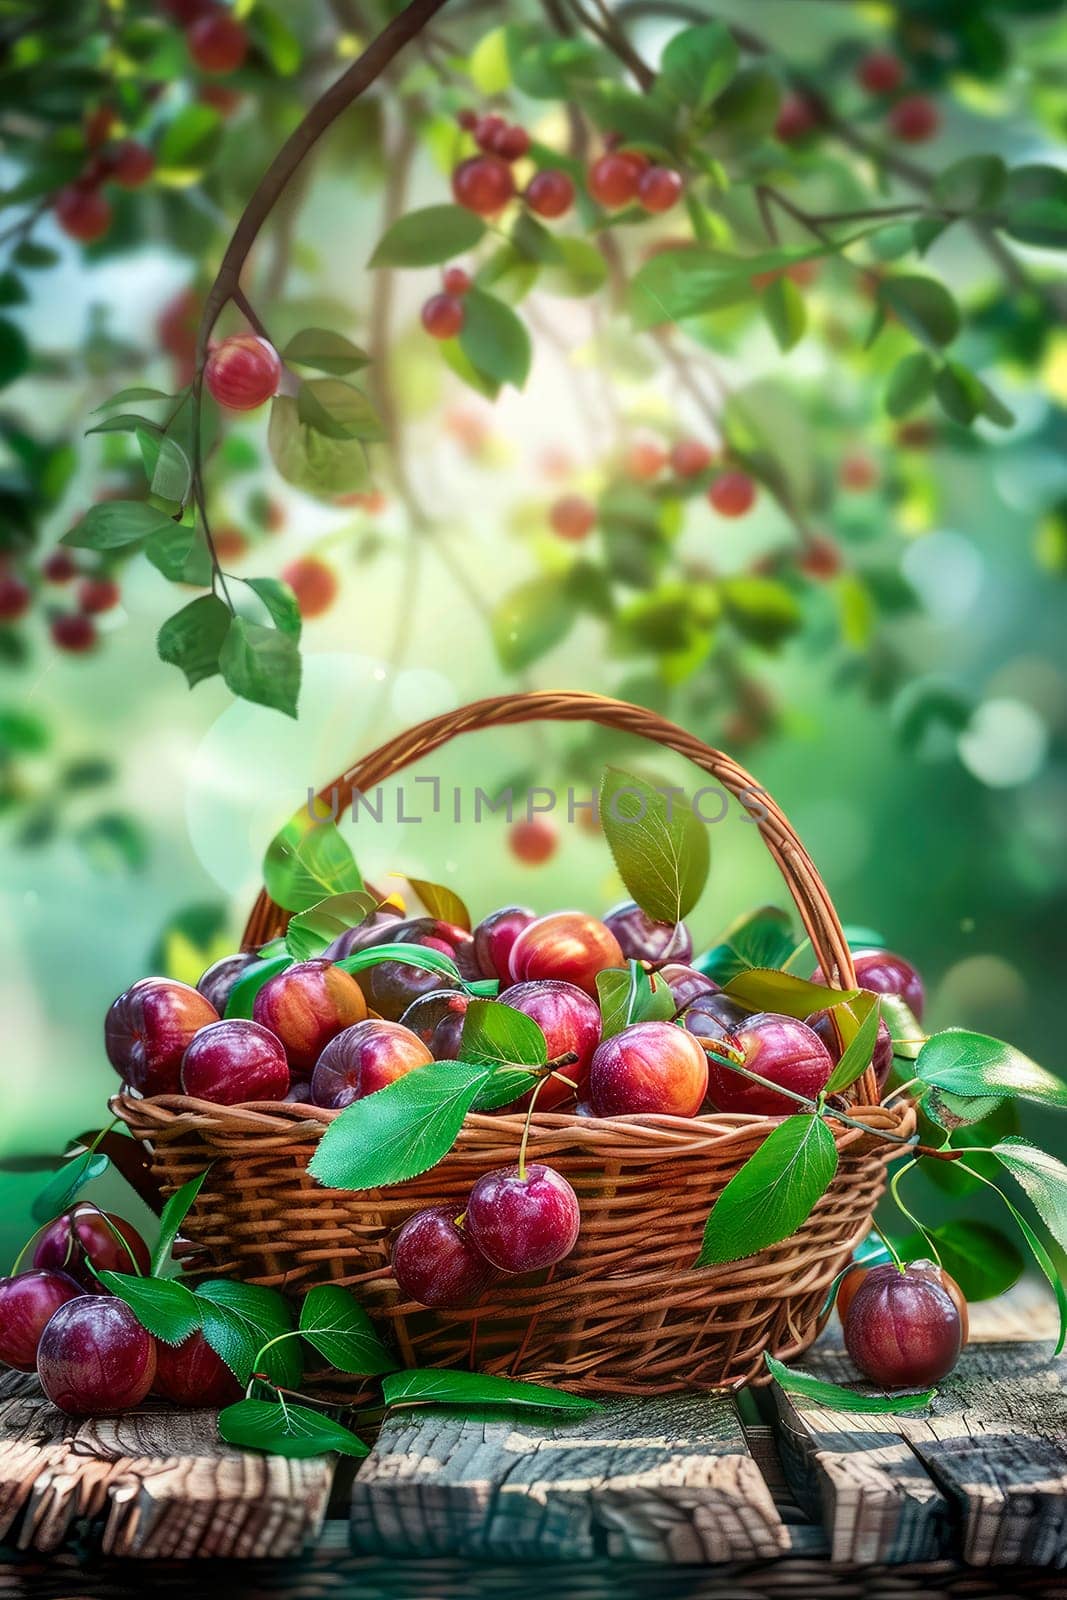 plum in a basket in the garden. selective focus. food.